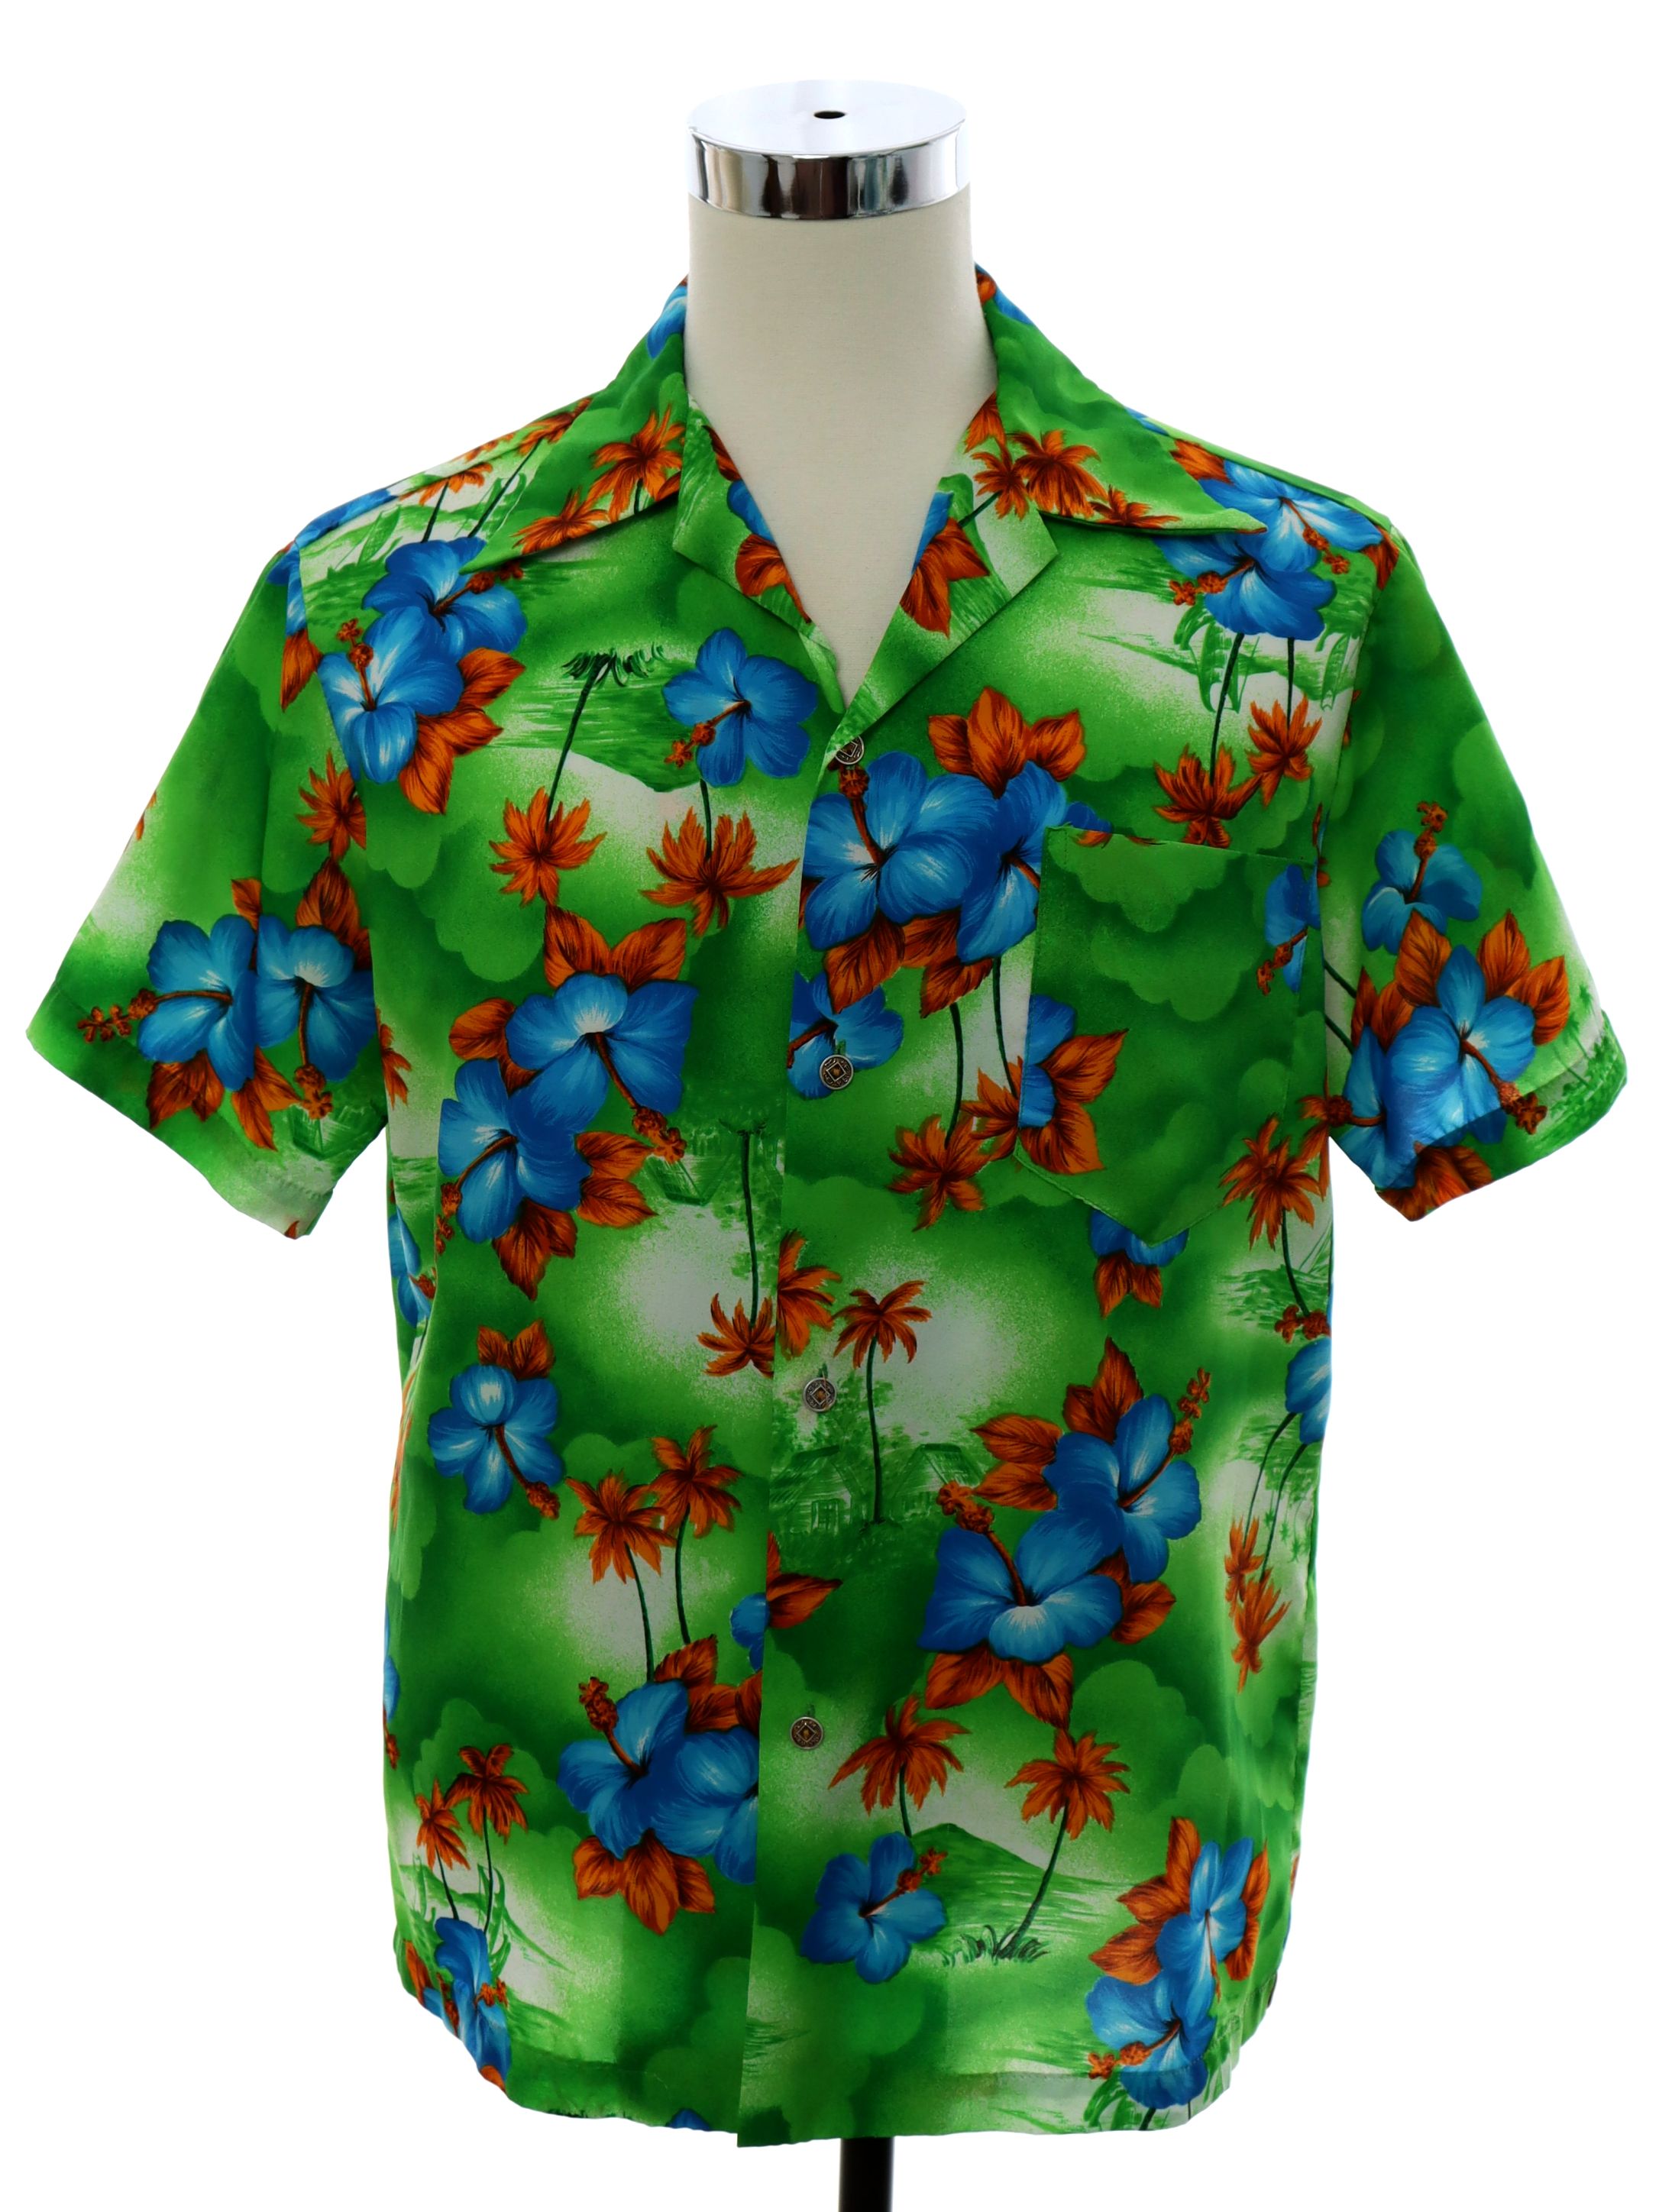 Retro 1970's Hawaiian Shirt (Home Sewn) : 70s -Home Sewn- Mens shades ...